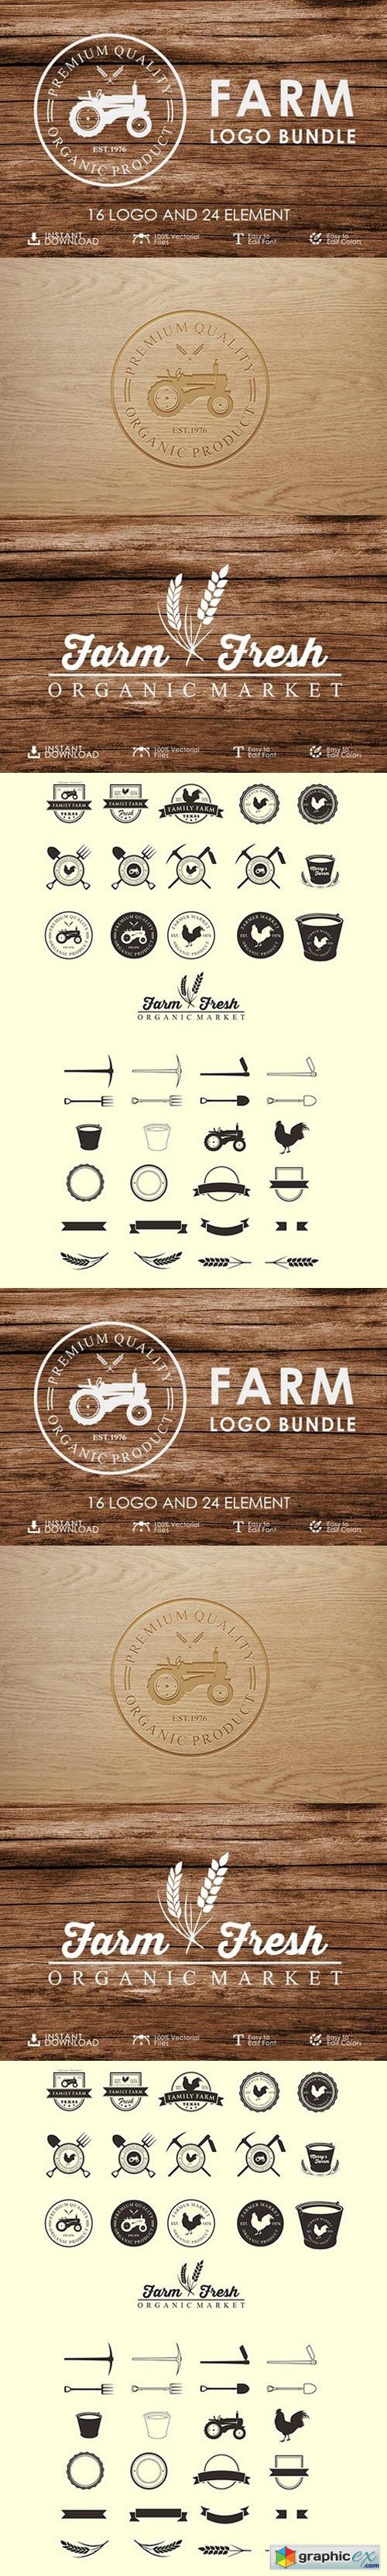 Set of vintage farm logo